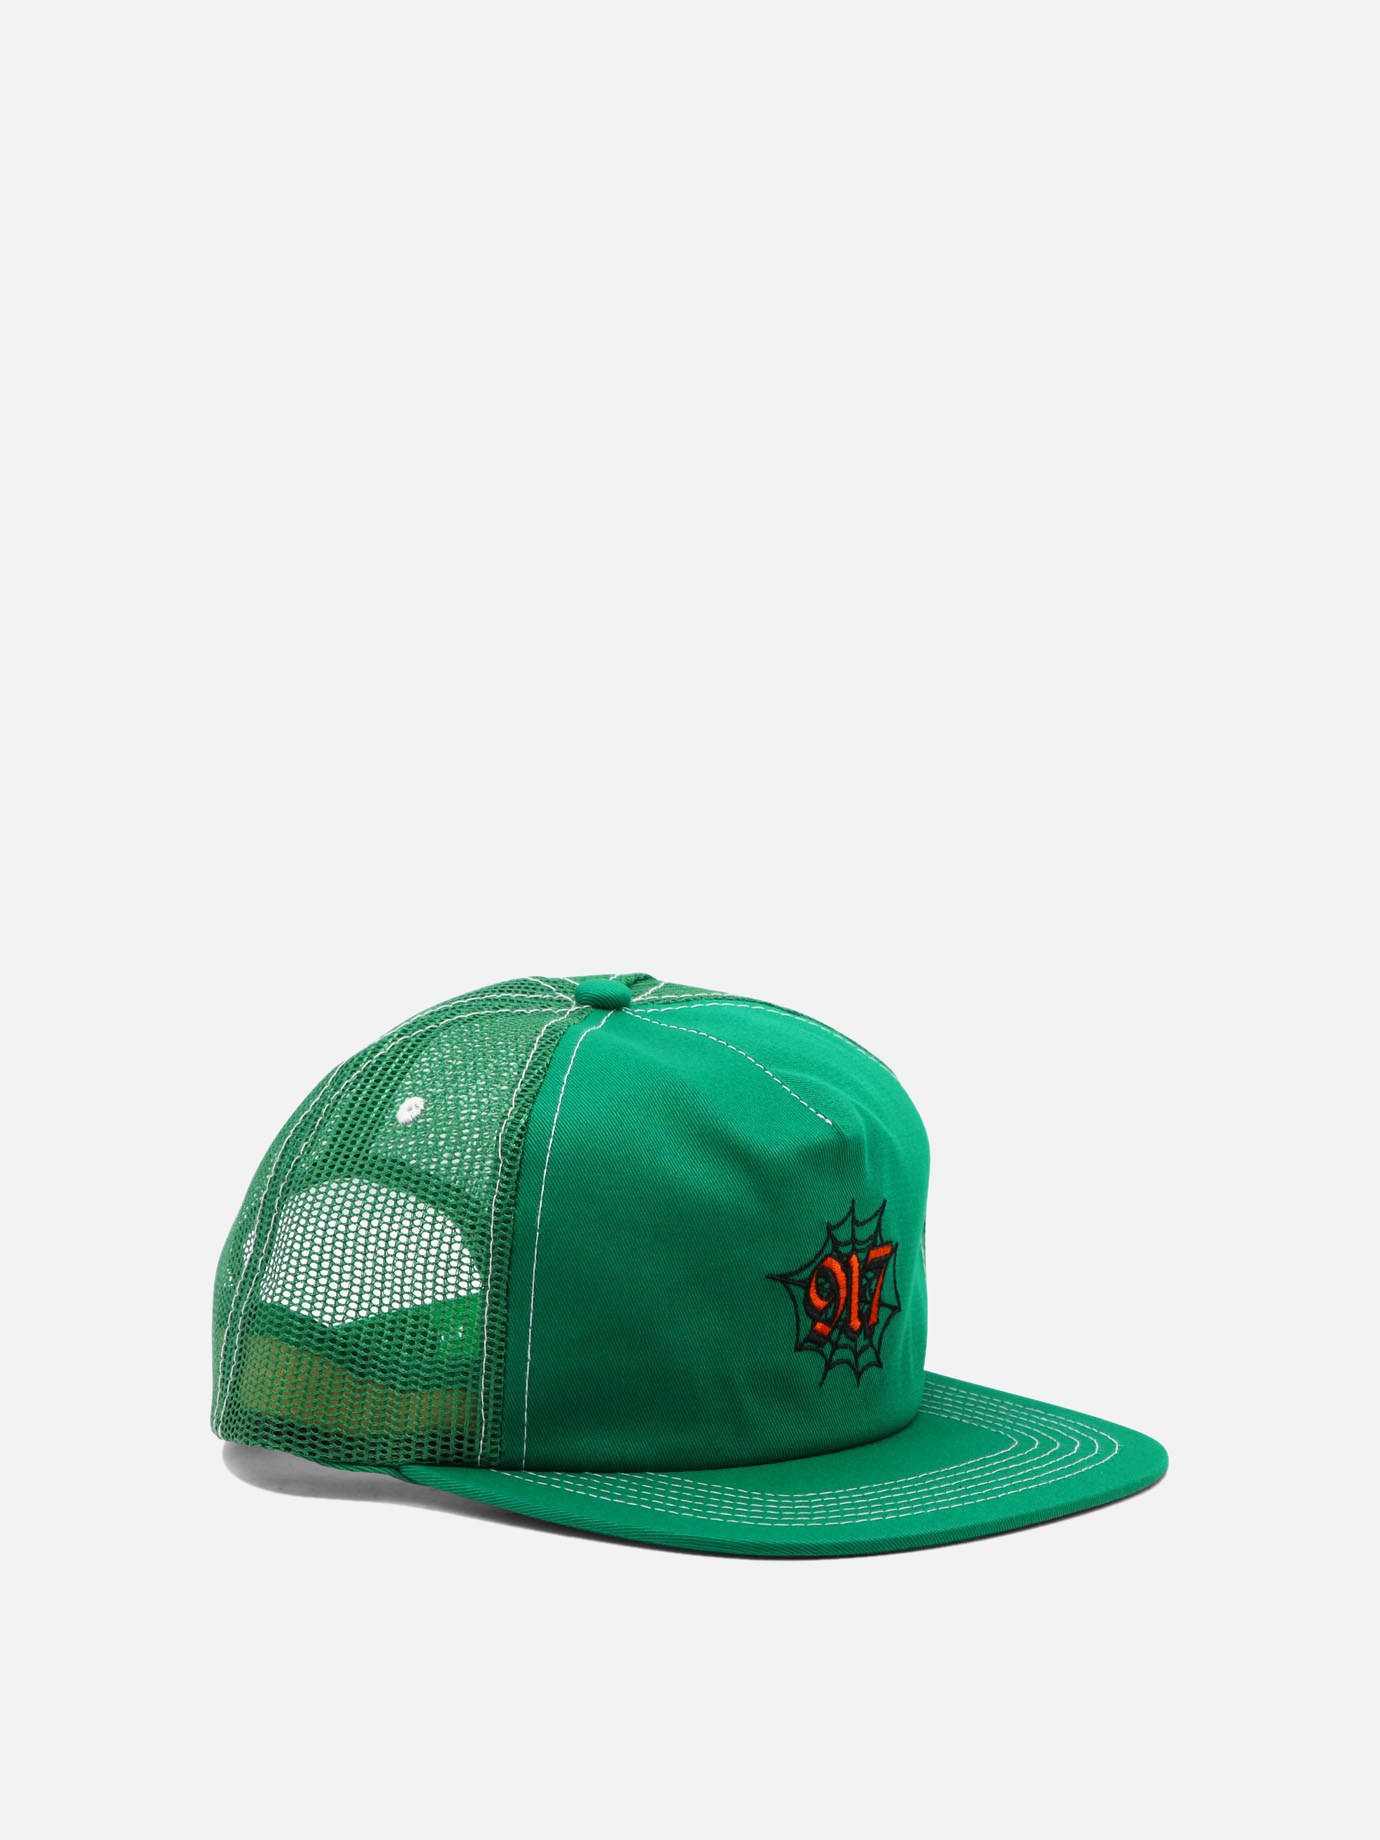  Web  baseball cap by Call Me 917